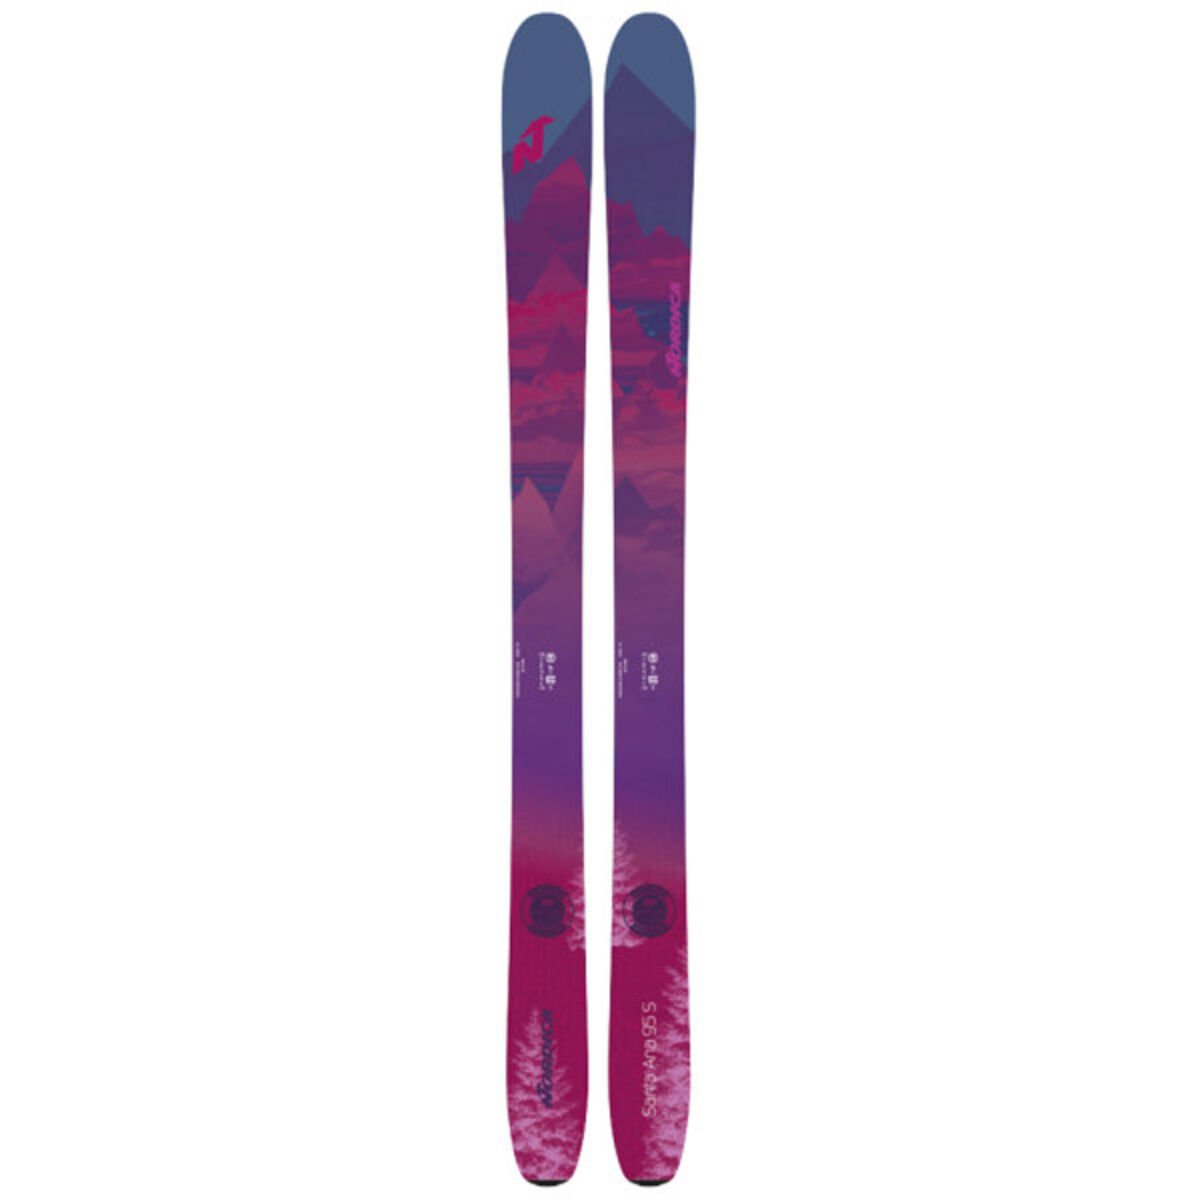 Nordica 2020 Santa Ana 95 S Junior Skis